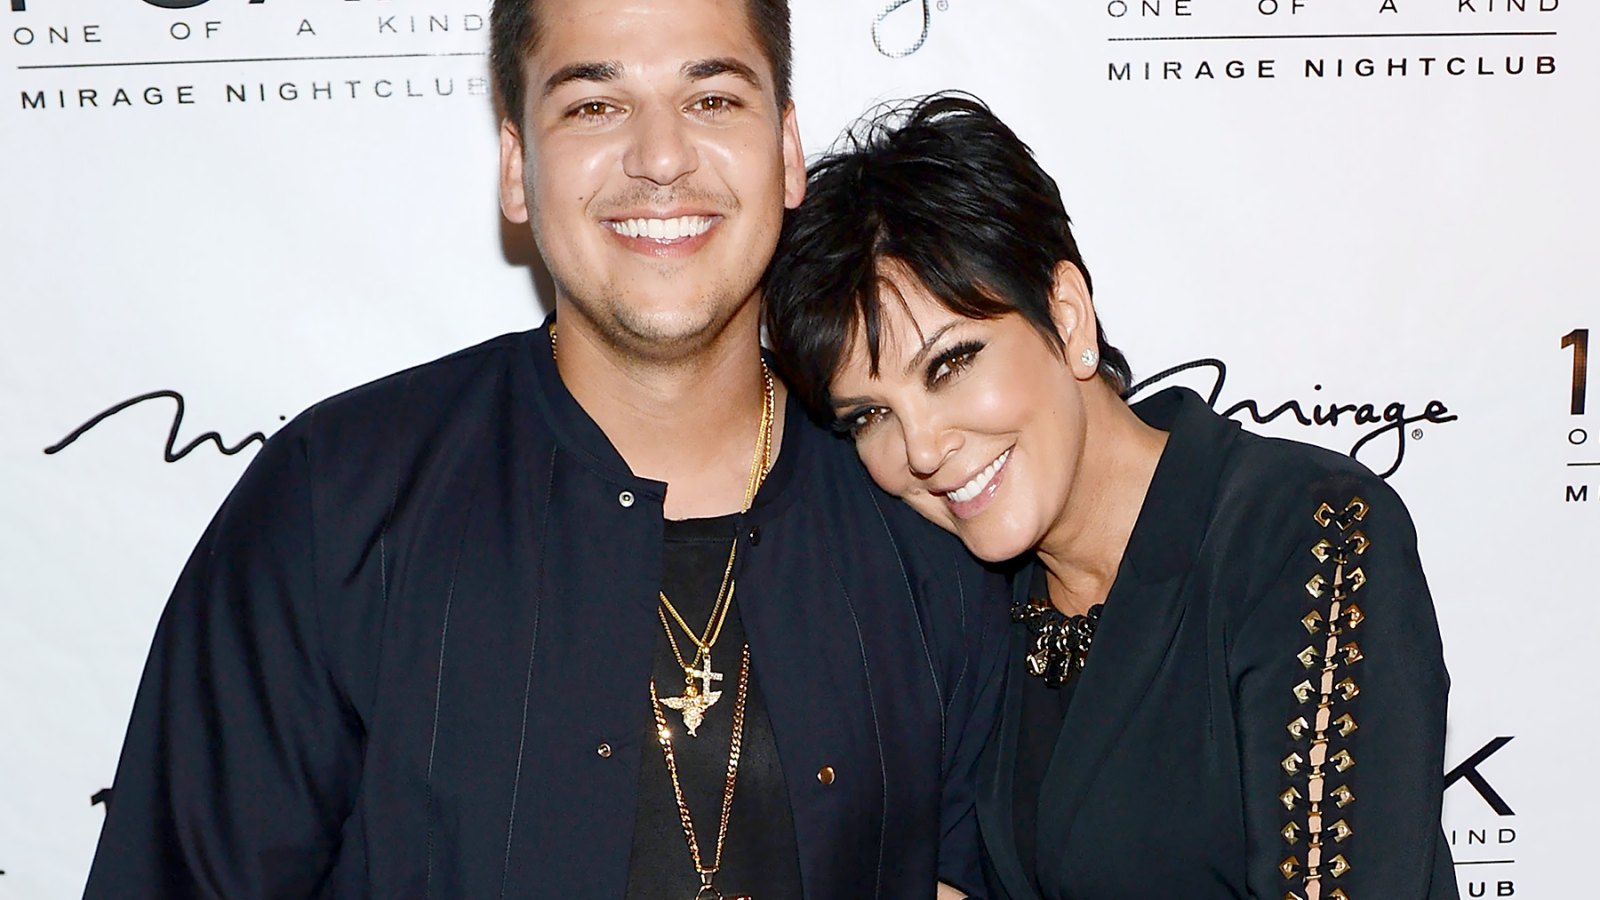 Kris Jenner Calls Rob Kardashian "Chubby" While Discussing Self-Esteem